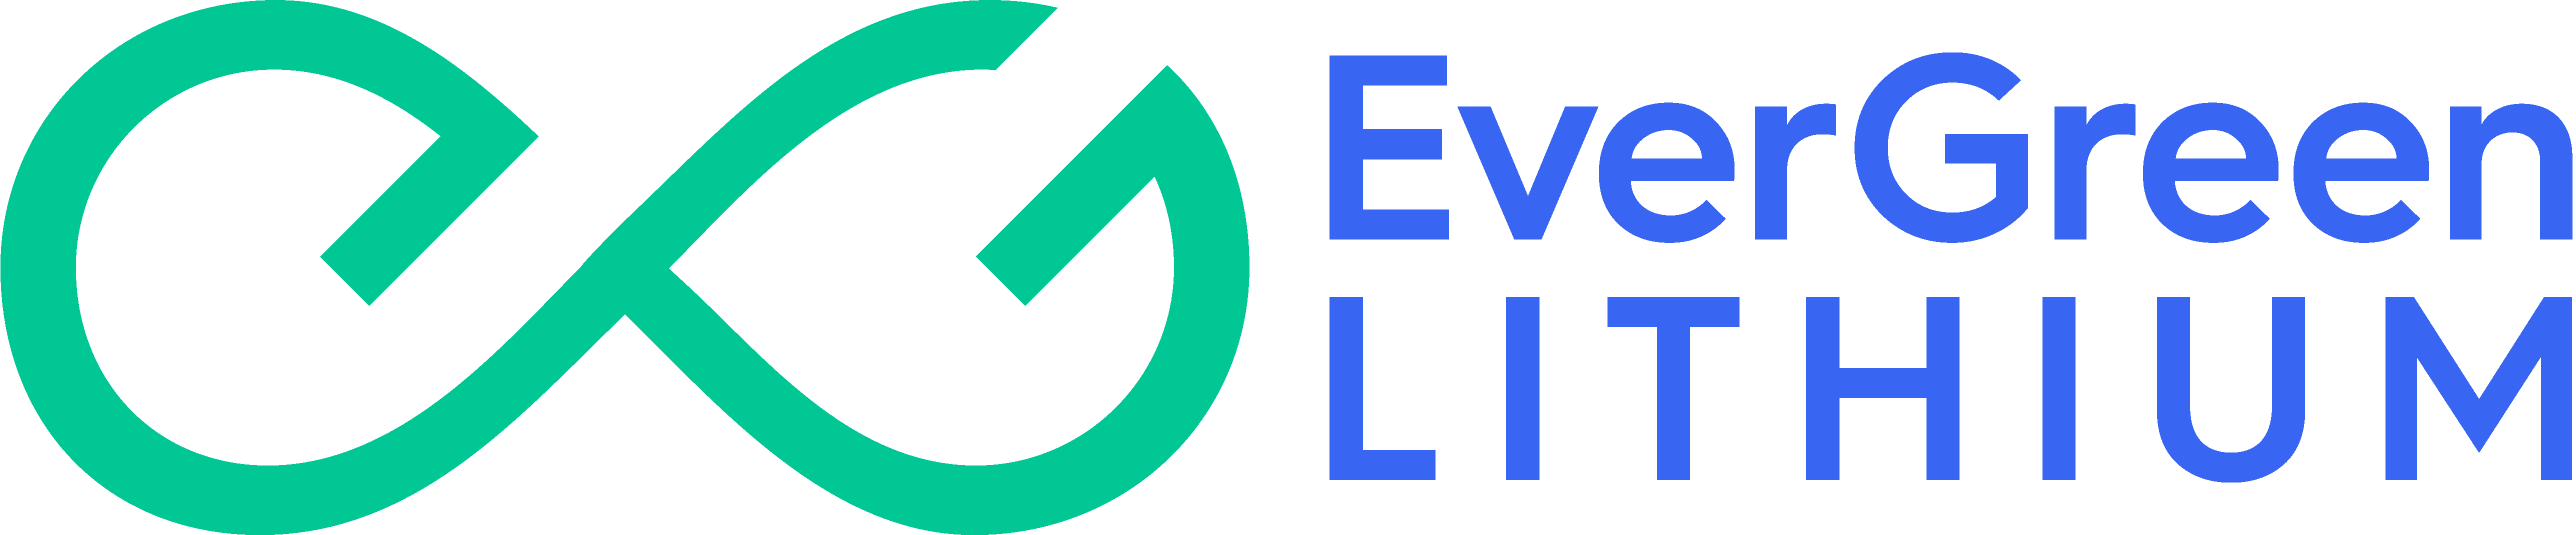 Evergreen Lithium